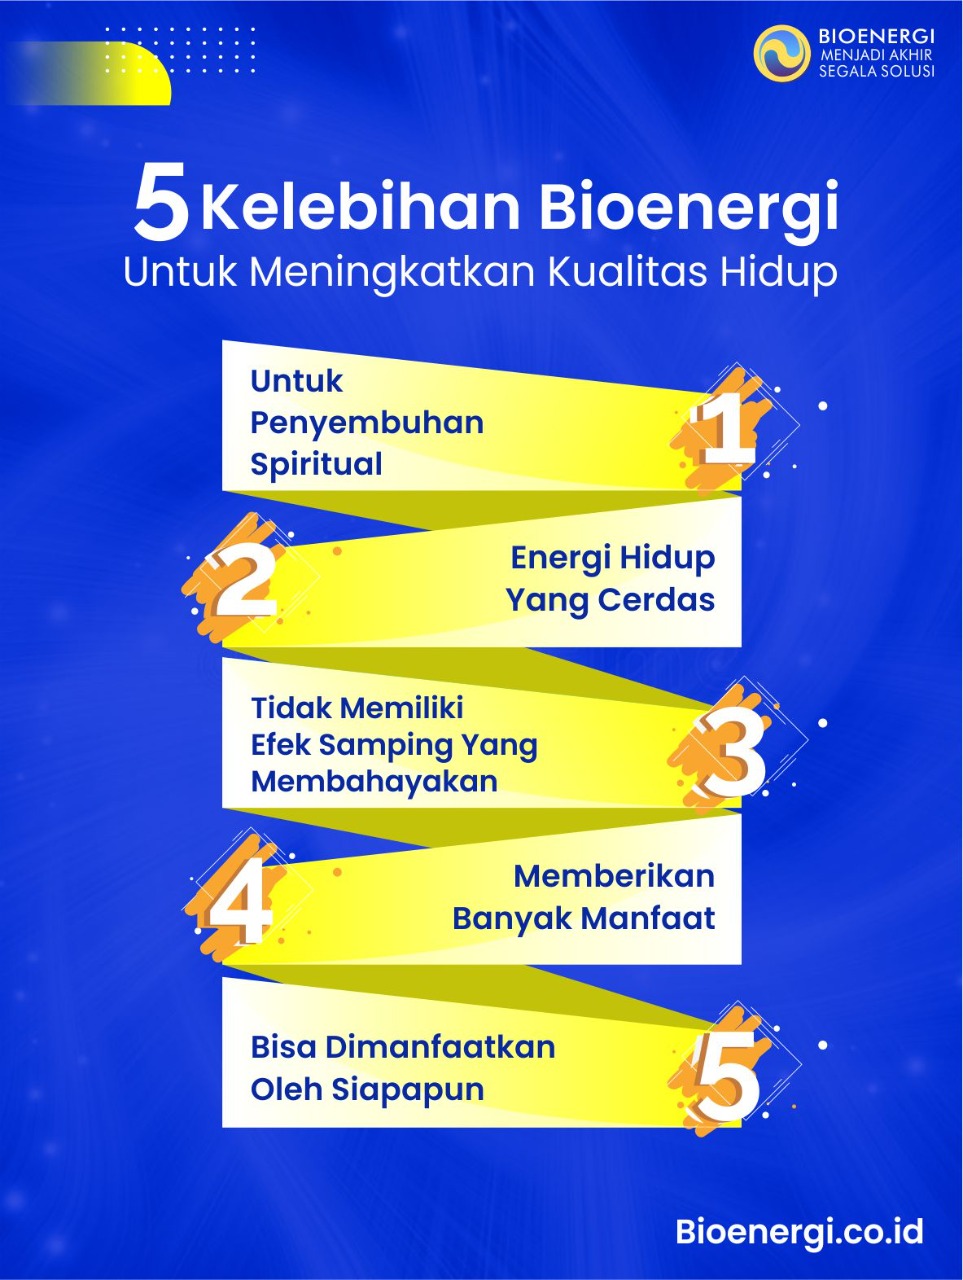 Kelebihan Bioenergi Di Indonesia - bioenergi.co.id